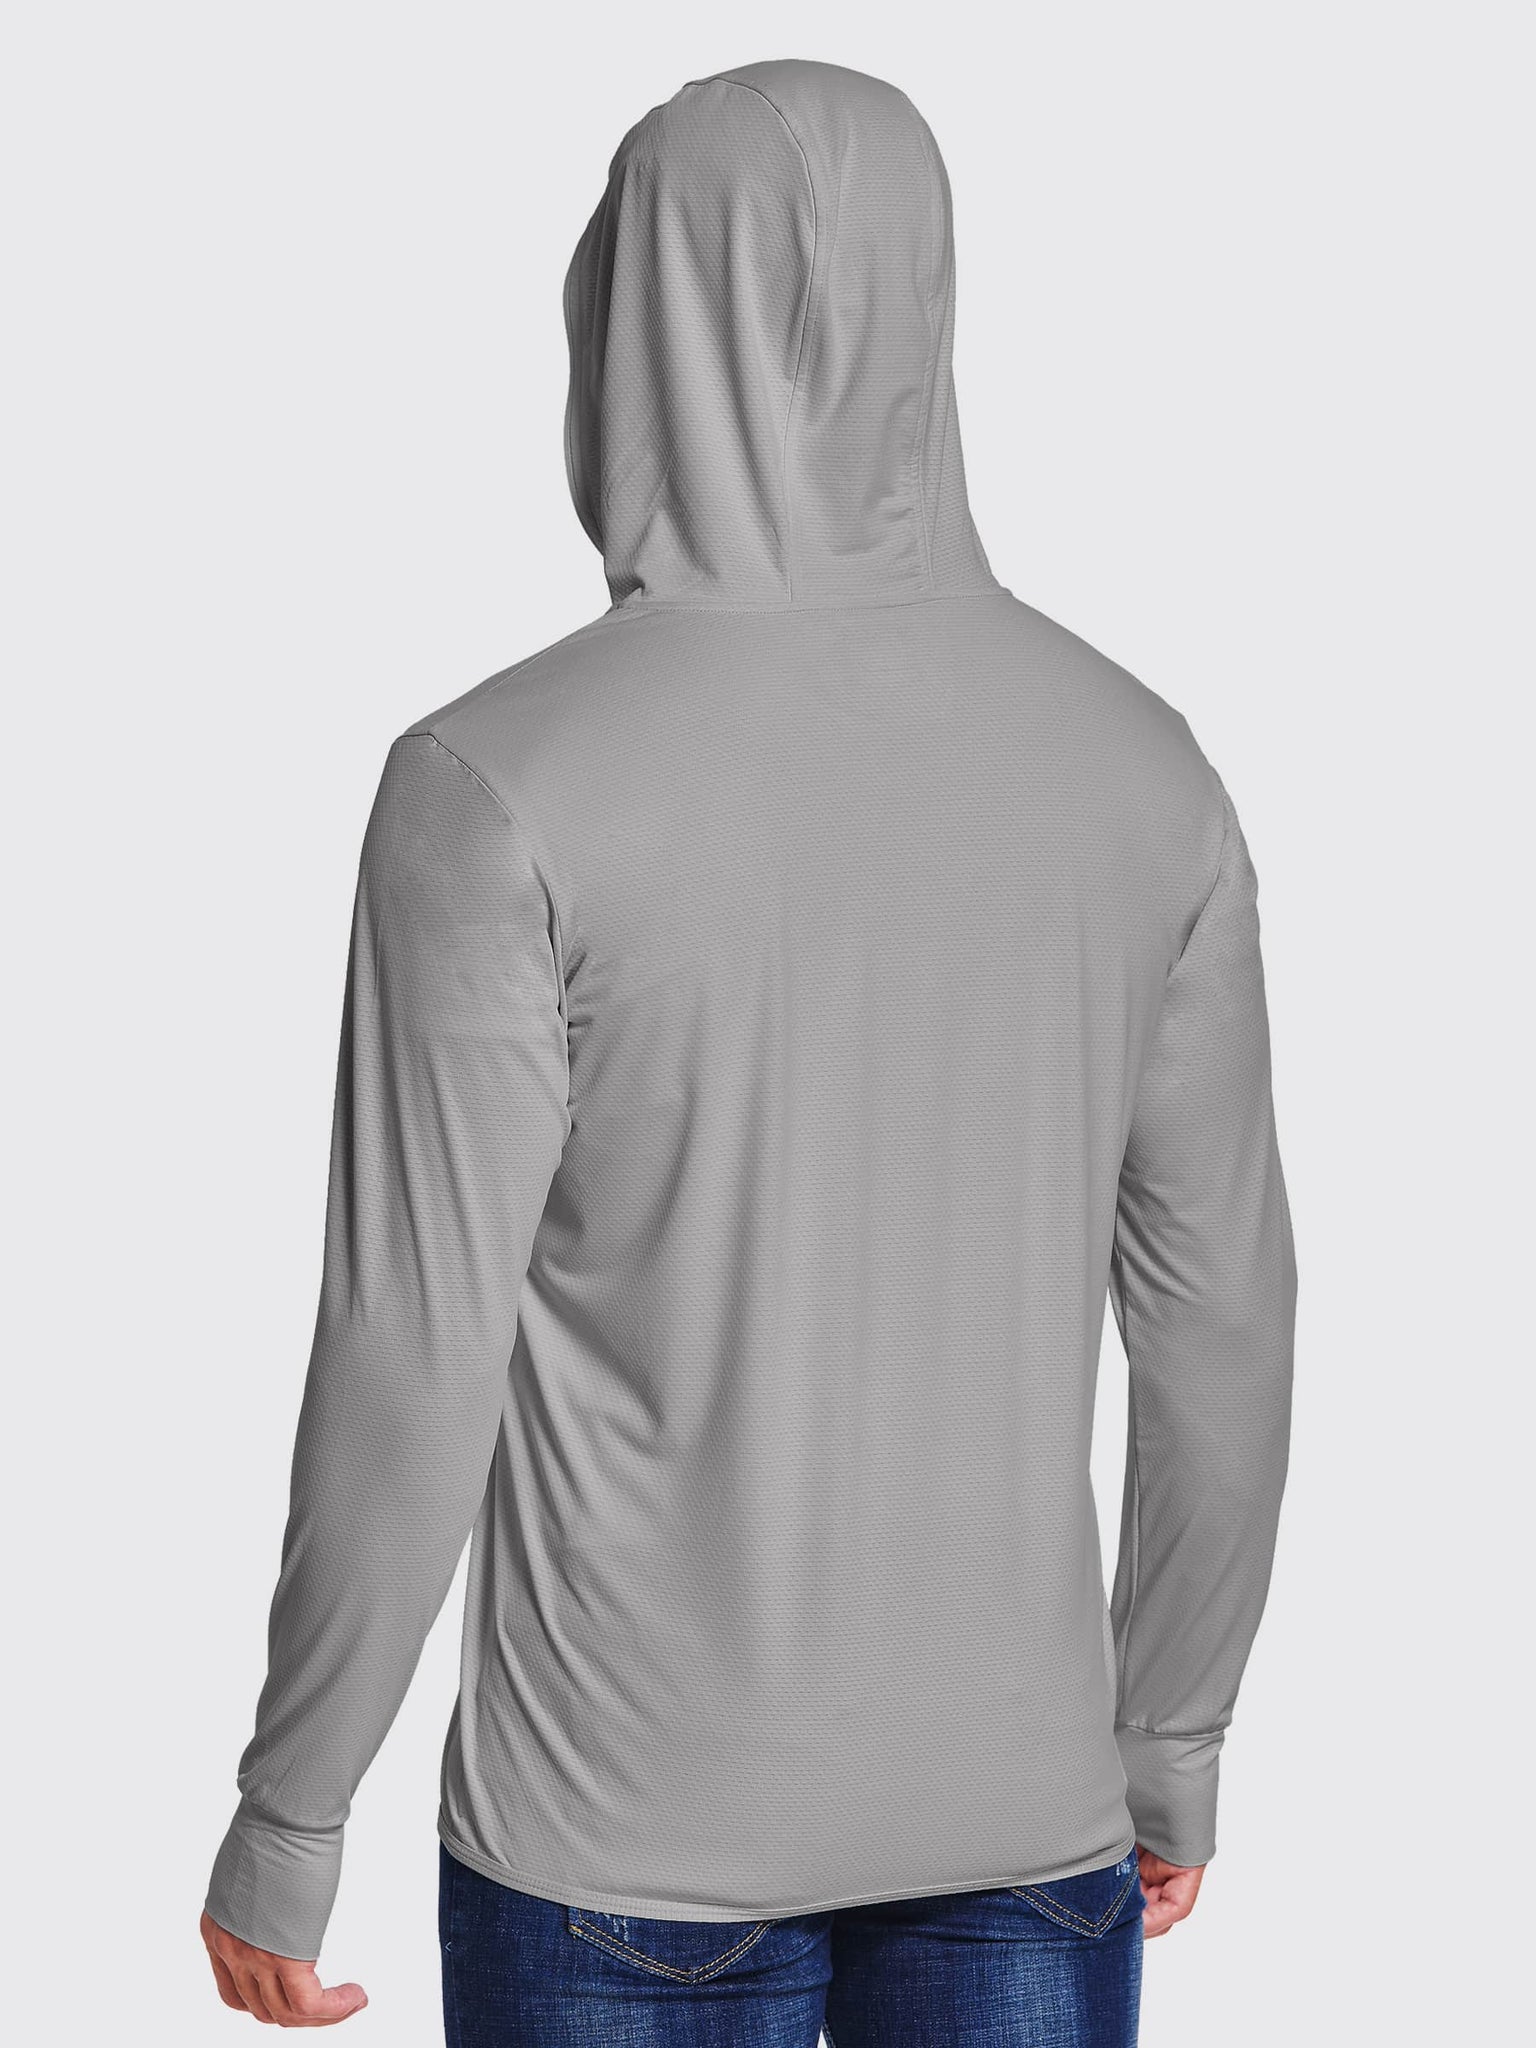 Willit Men's Sun Protection Jacket Full Zip_DeepGray_model4